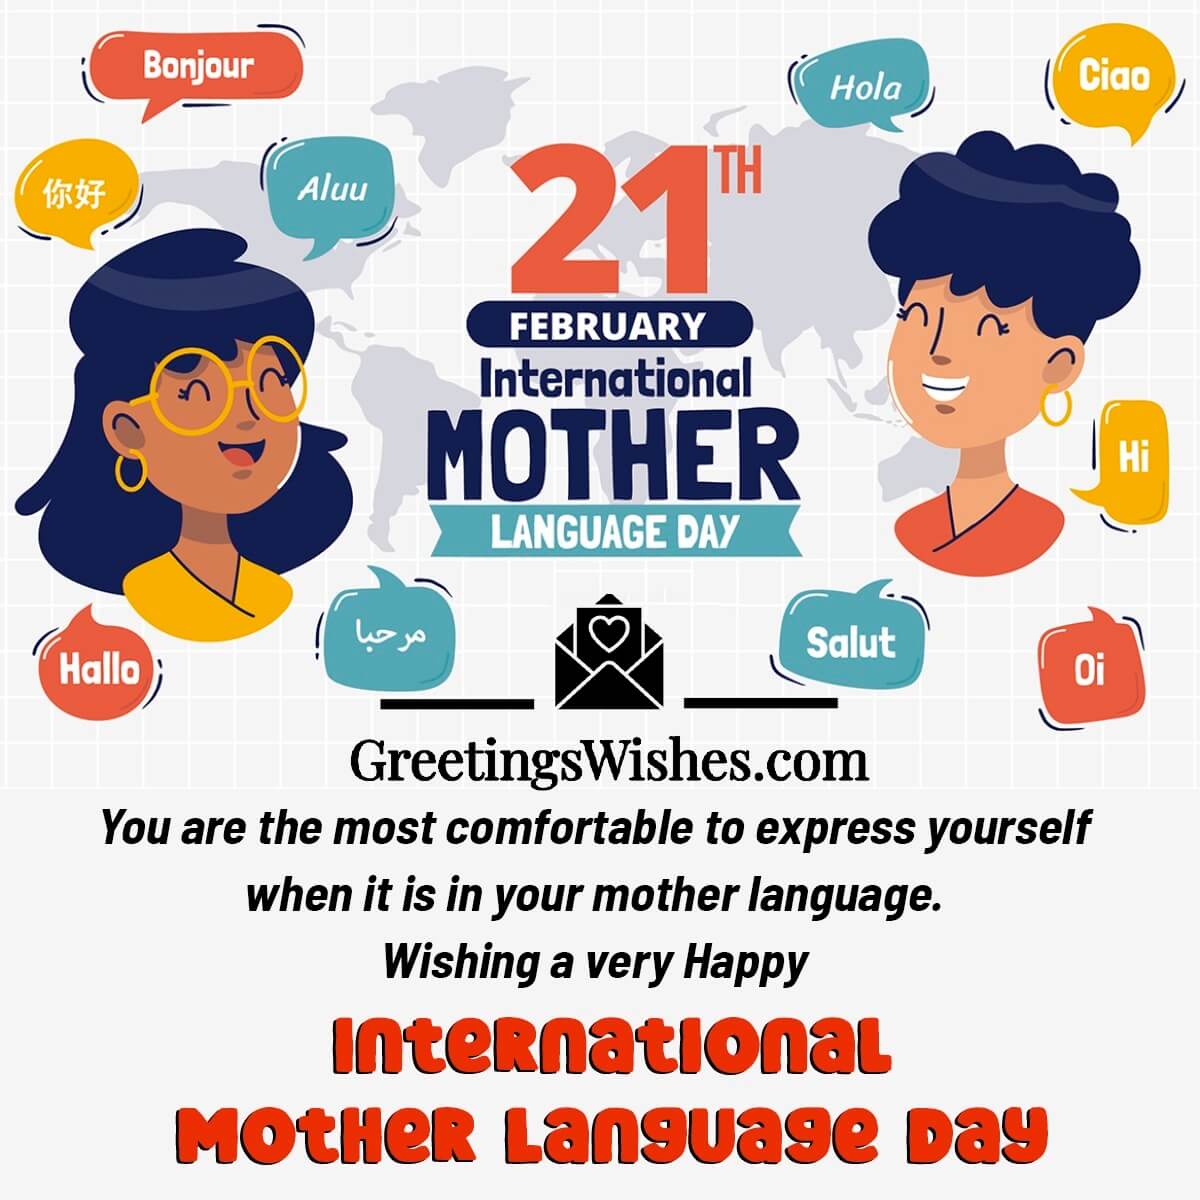 International Mother Language Day Message